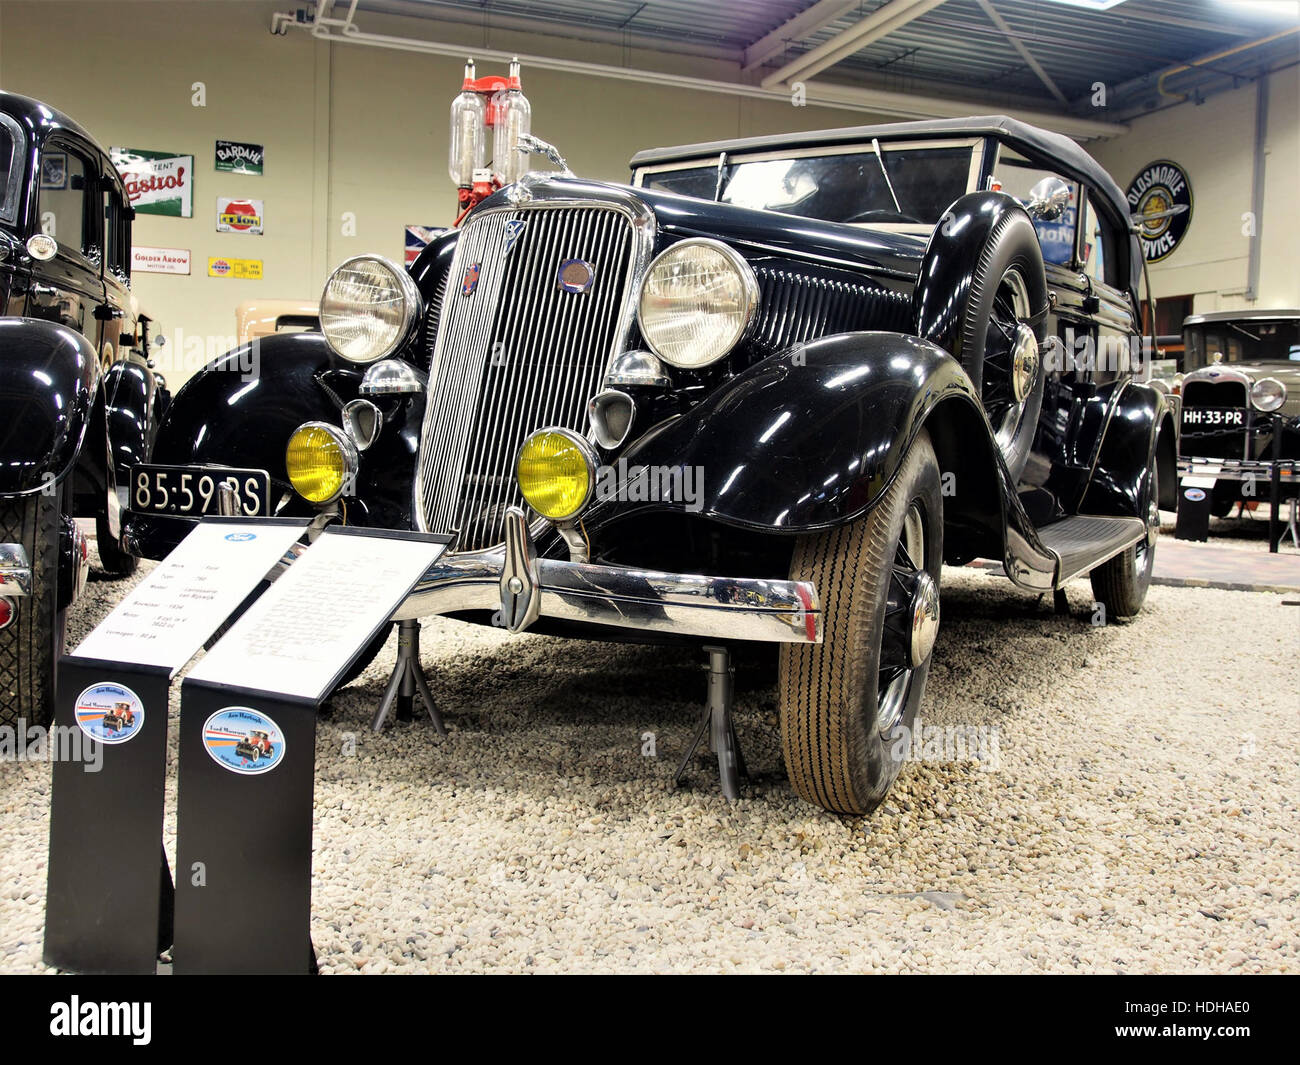 1934 Ford 760 carrosserie van Rijswijk, 8 cylinder V, 3622cc, 80hp pic1 Stock Photo